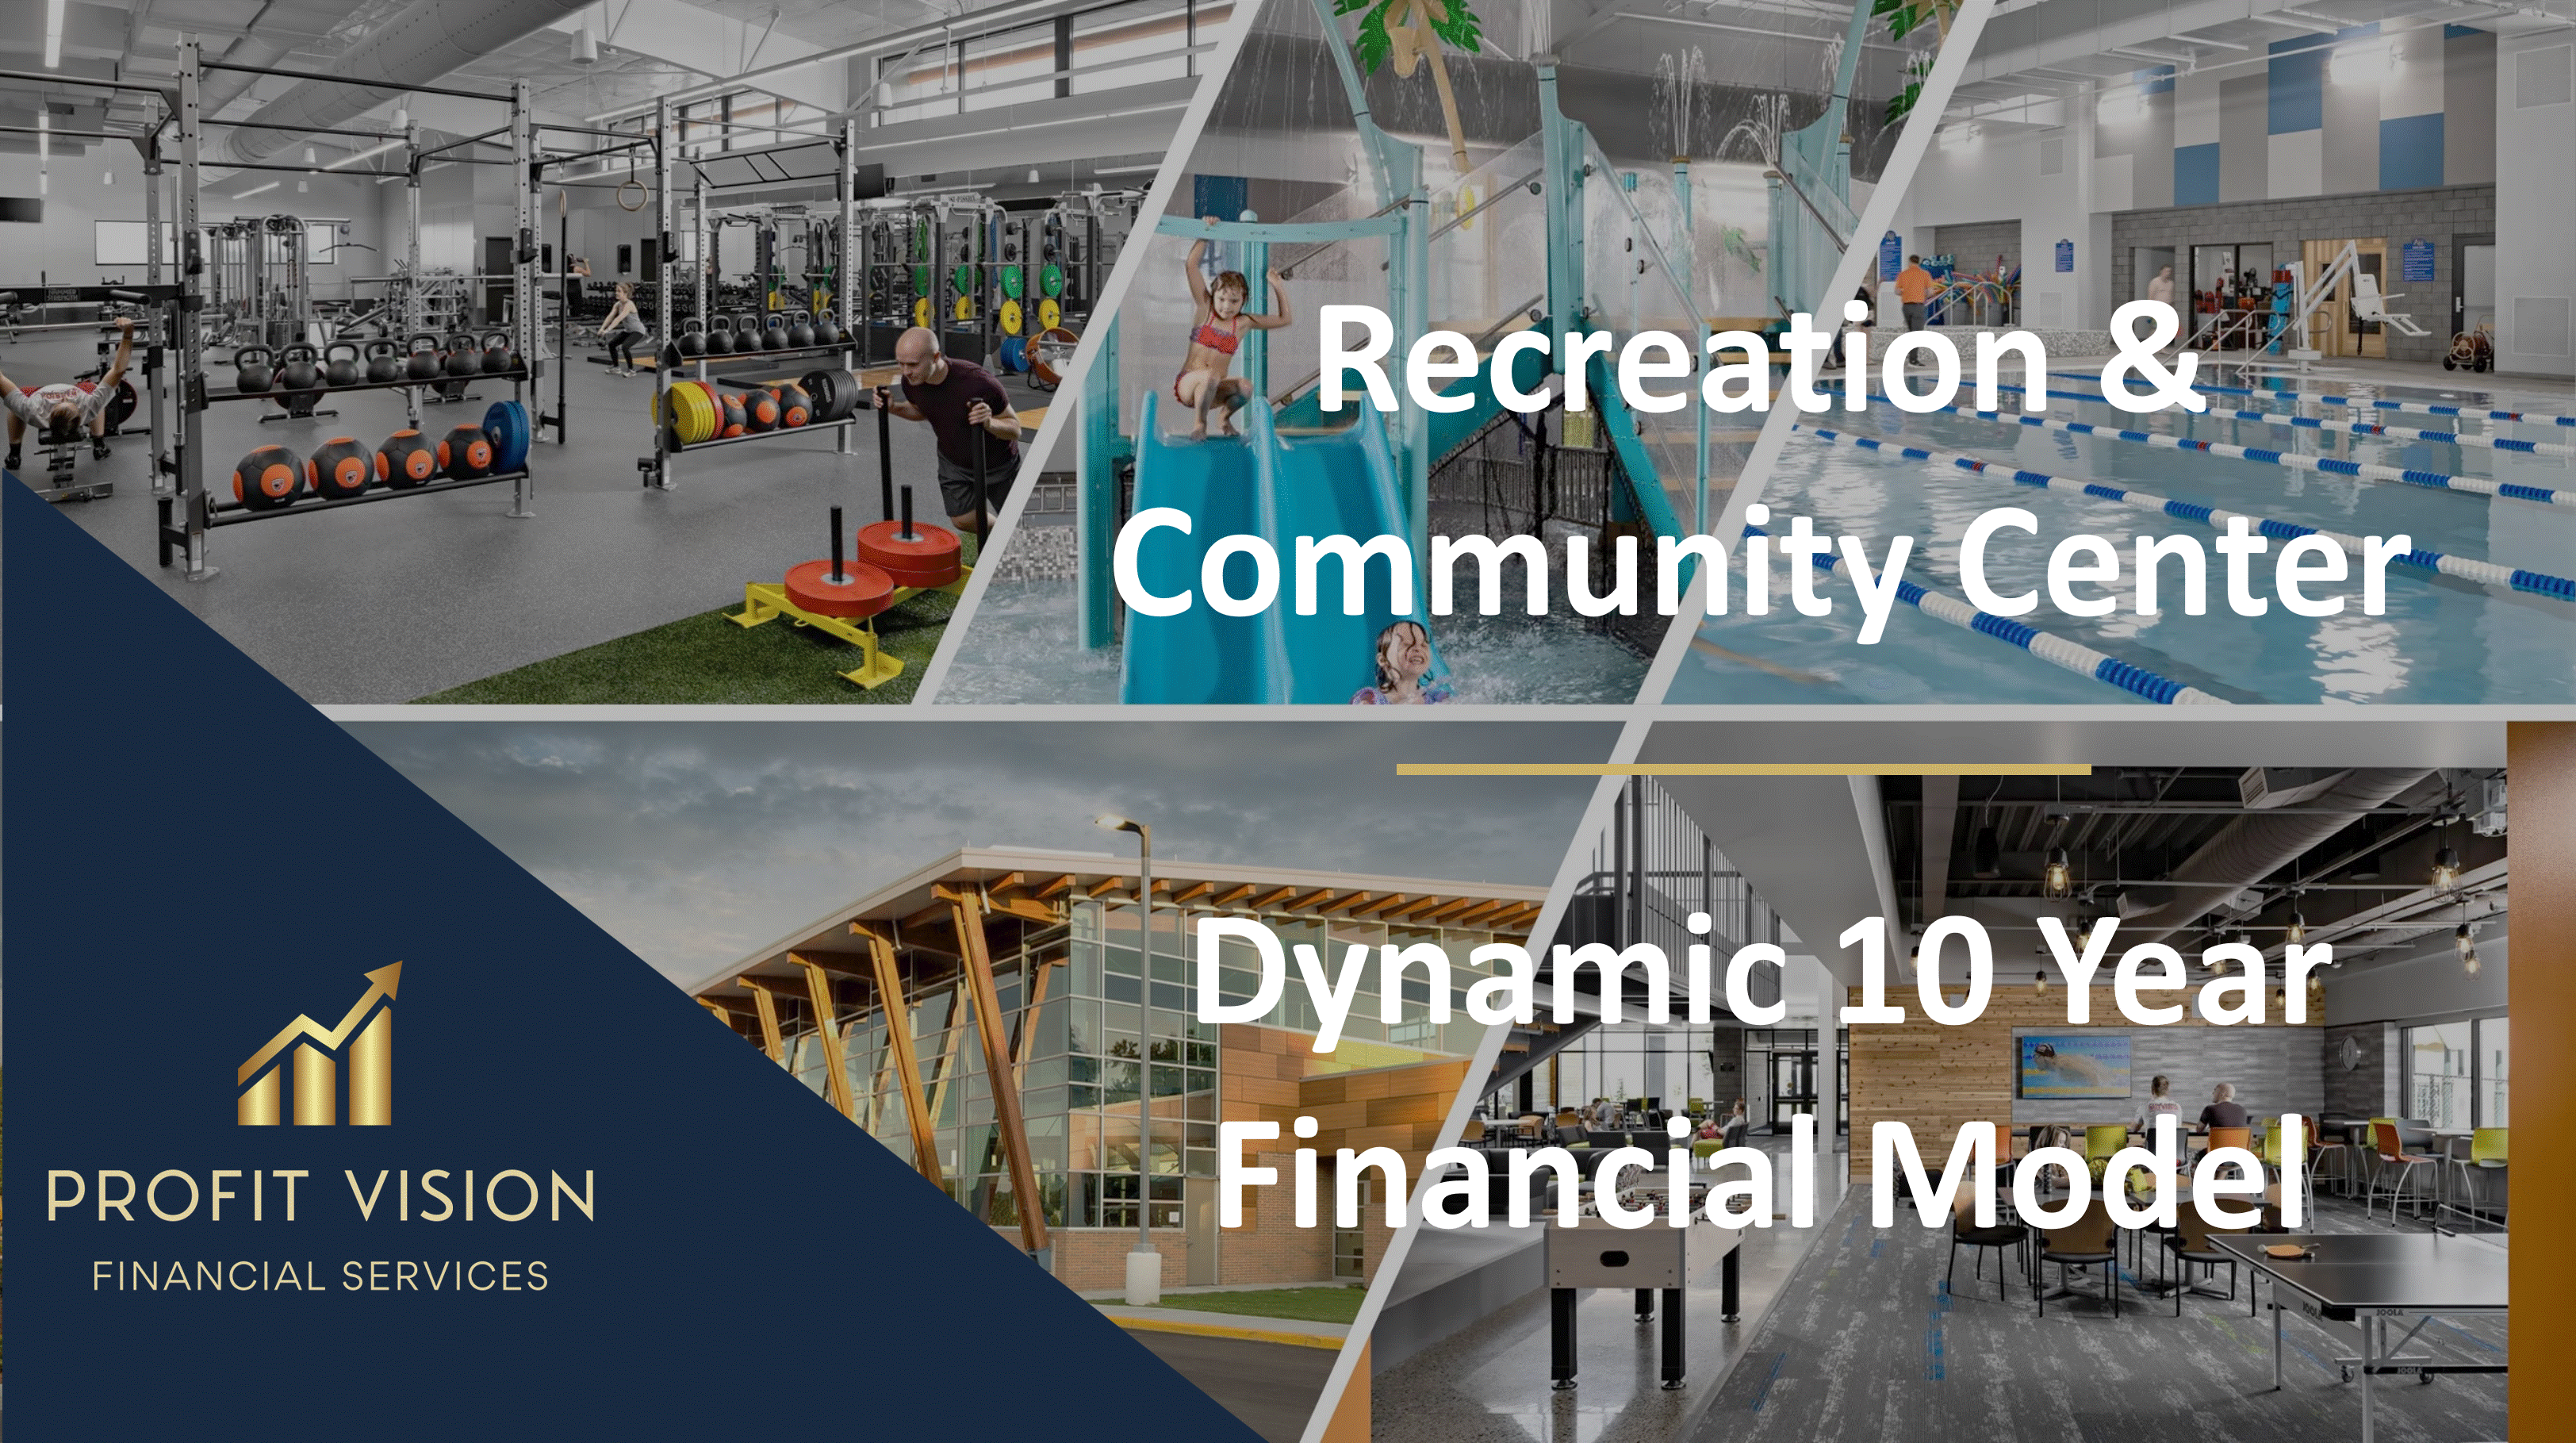 Recreation & Community Center Financial Model